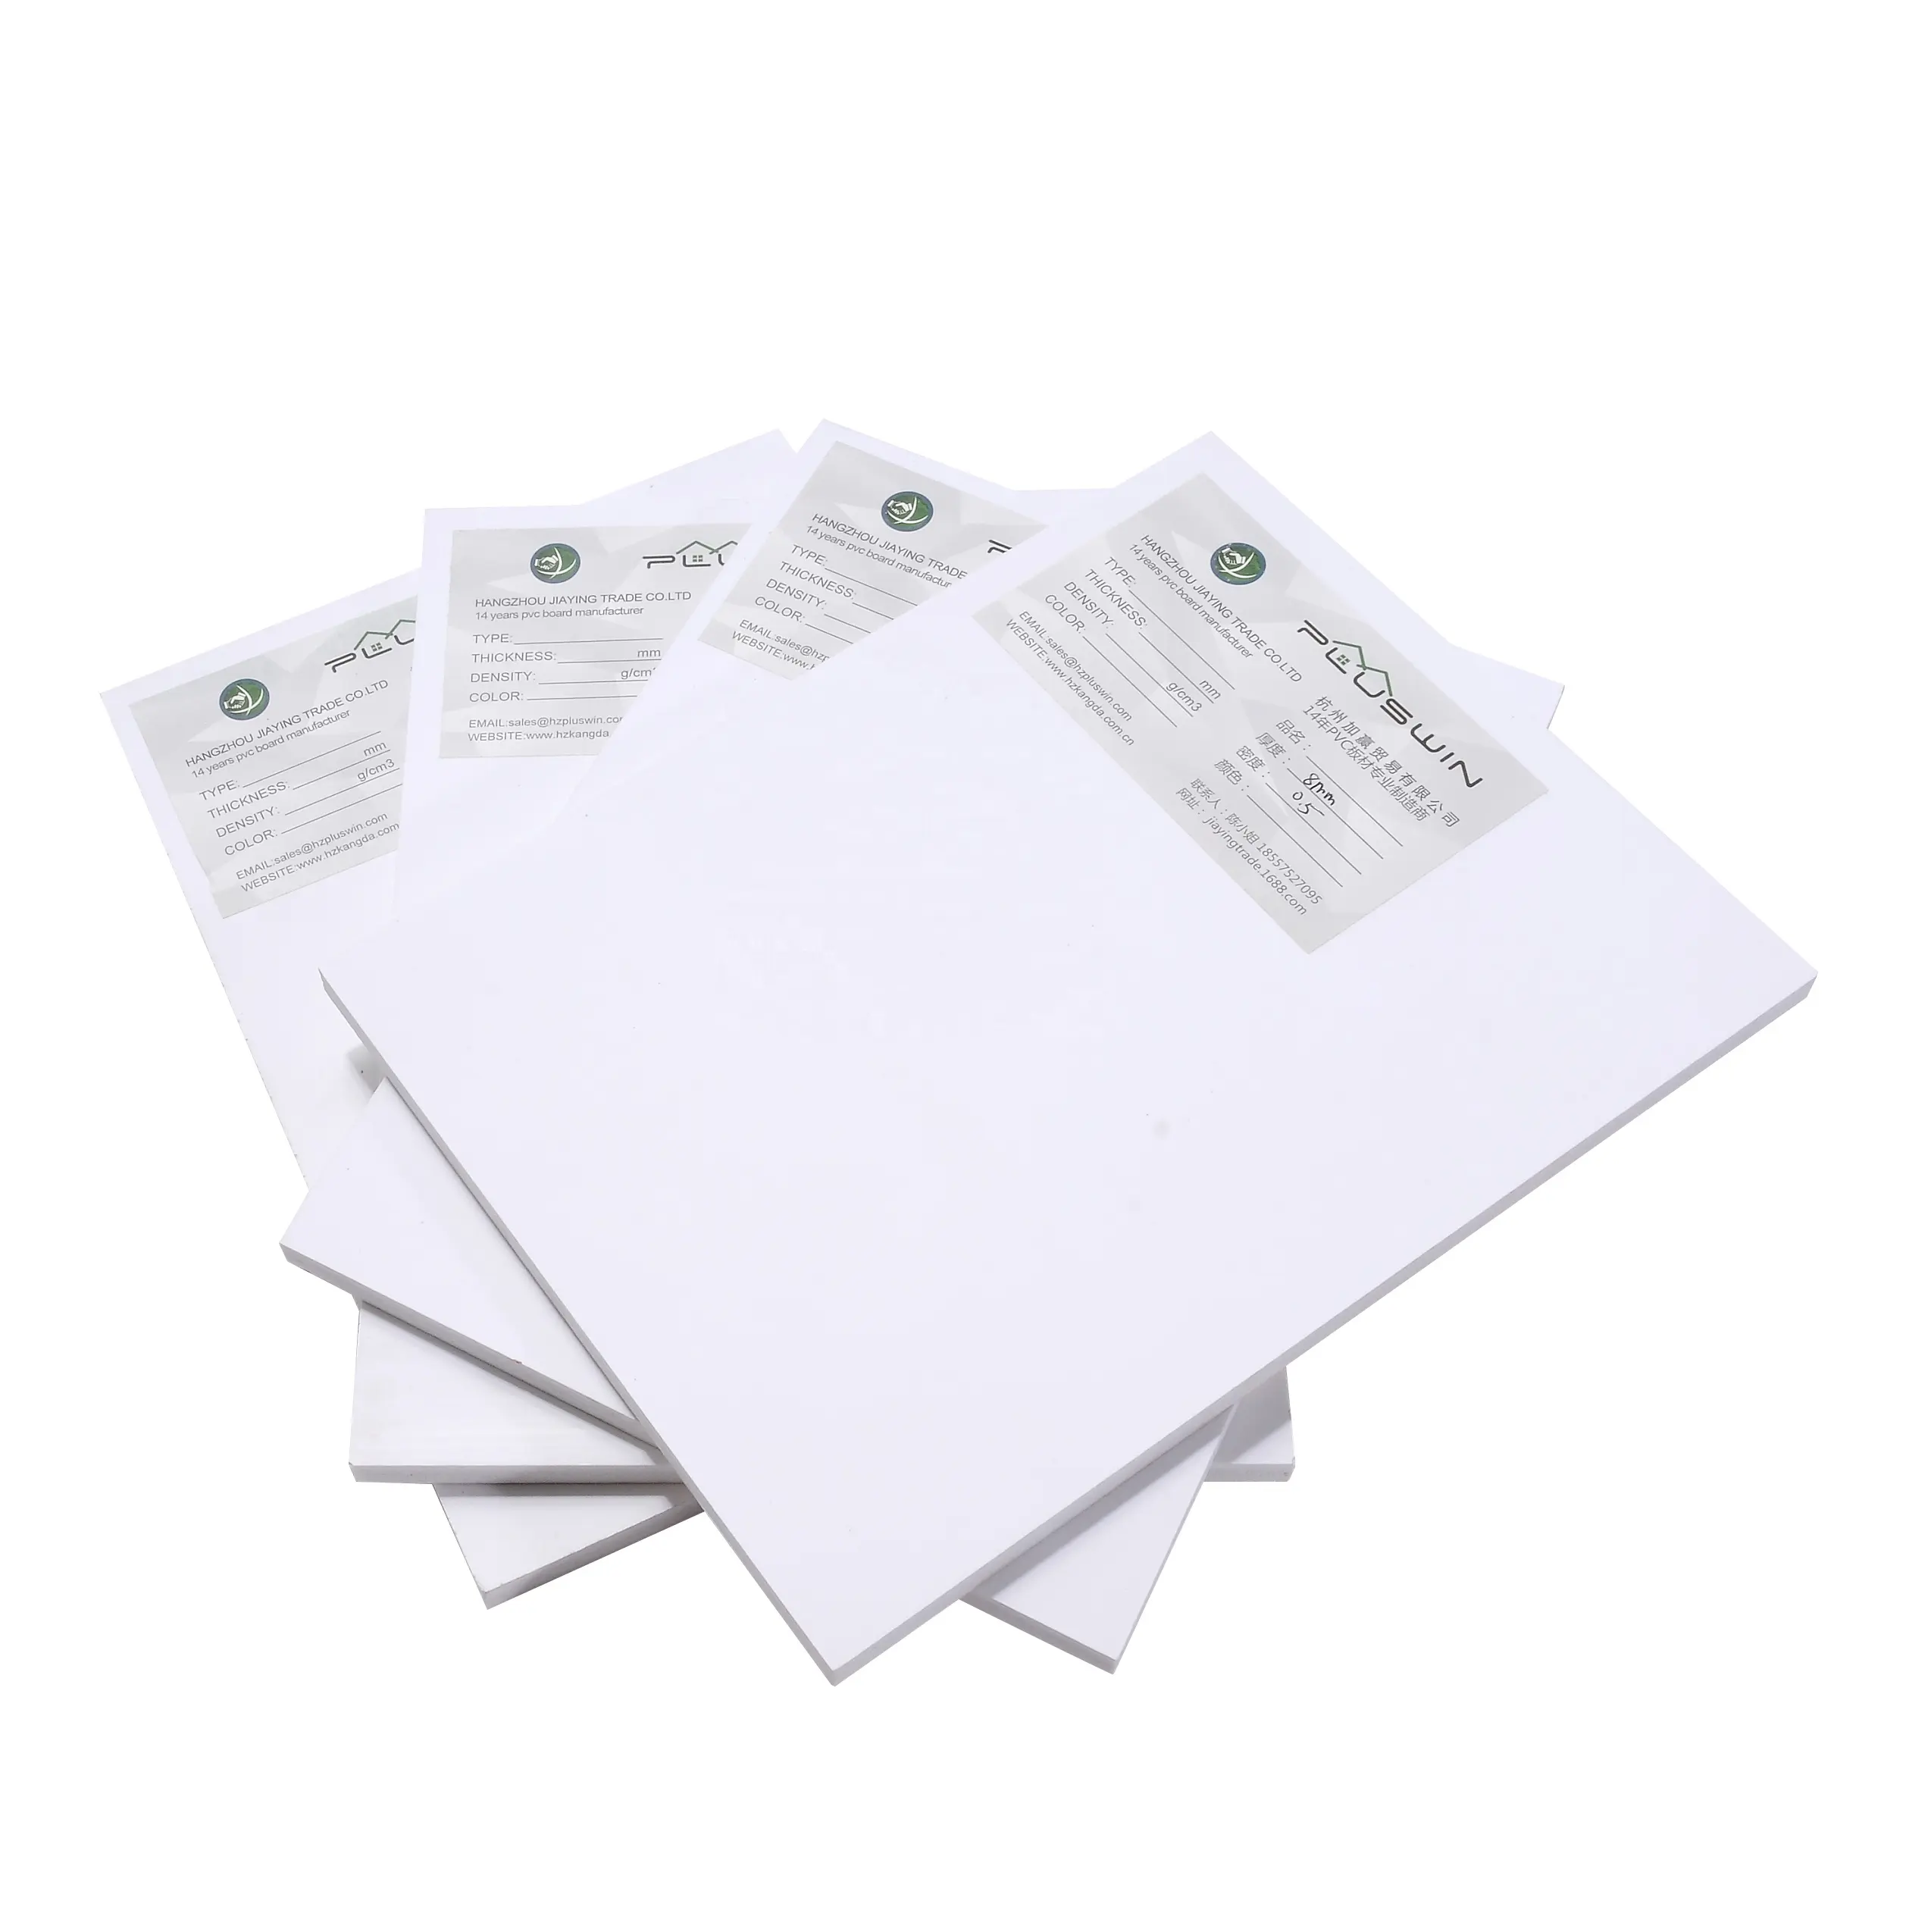 white or colored pvc sheet board Rigid Pvc Sheet Foam 1220*2440mm or custom size between 3-30mm